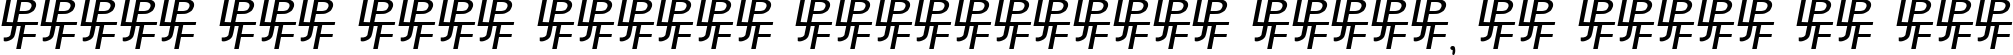 Пример написания шрифтом Peake Doubled текста на русском